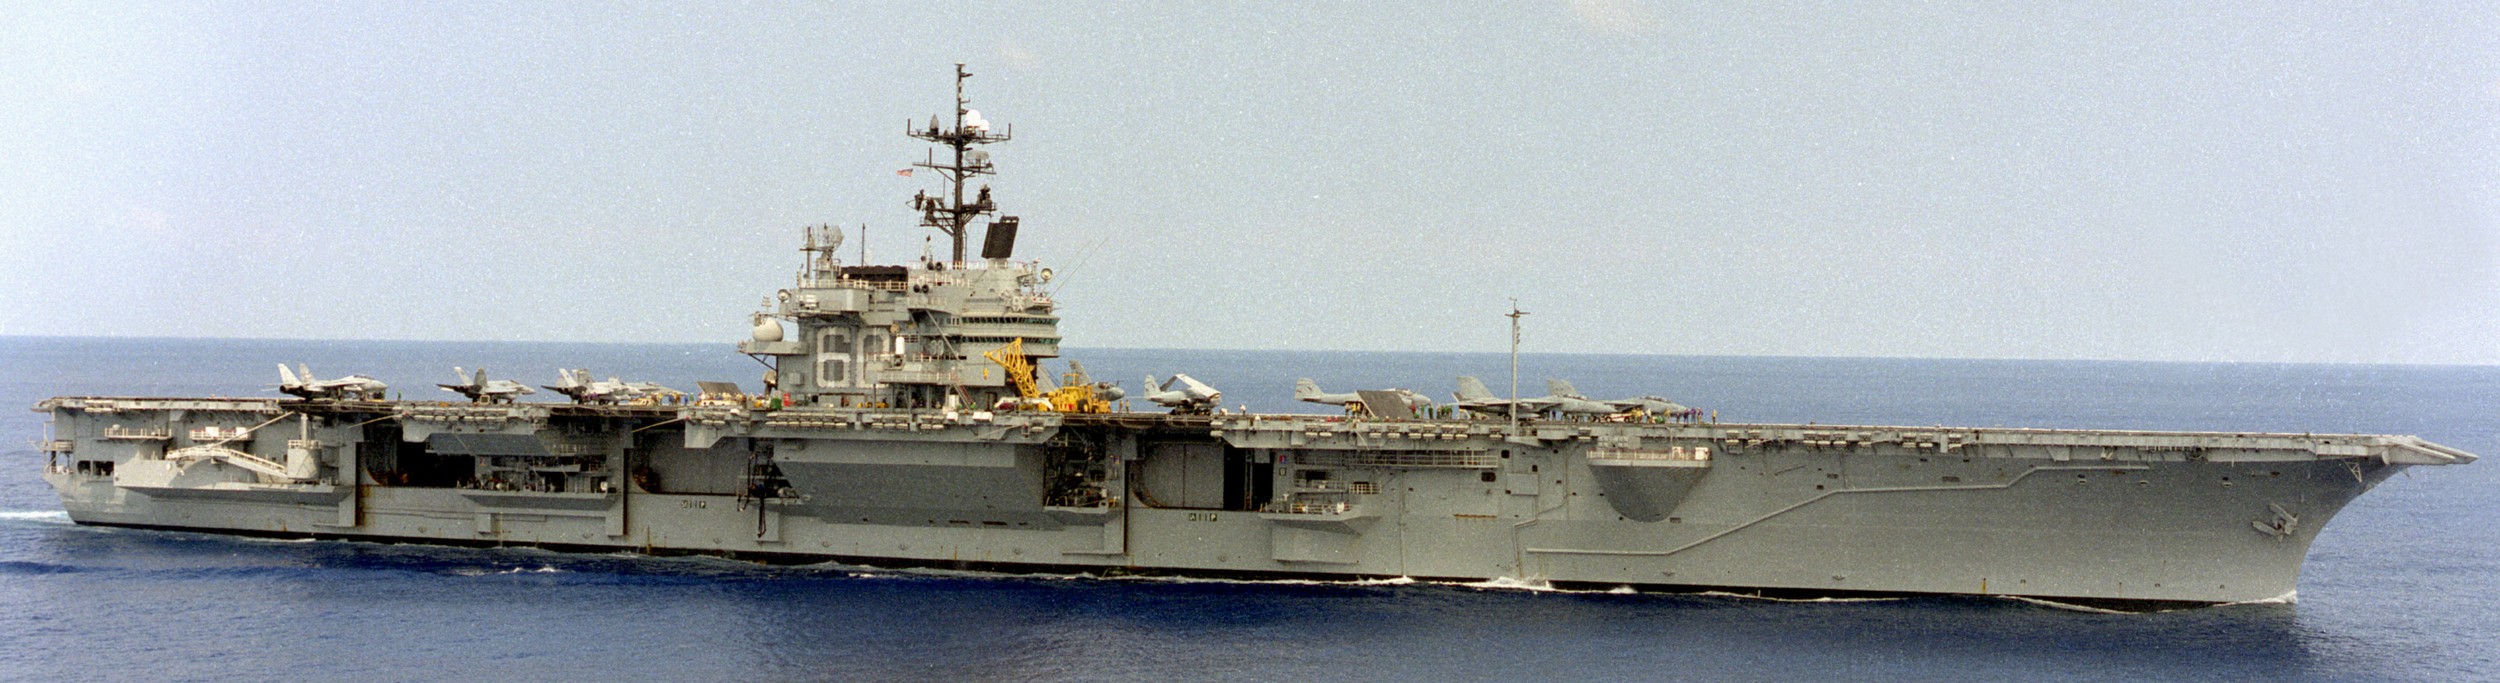 cv-60 uss saratoga forrestal class aircraft carrier air wing cvw-17 us navy atlantic ocean 1994 145